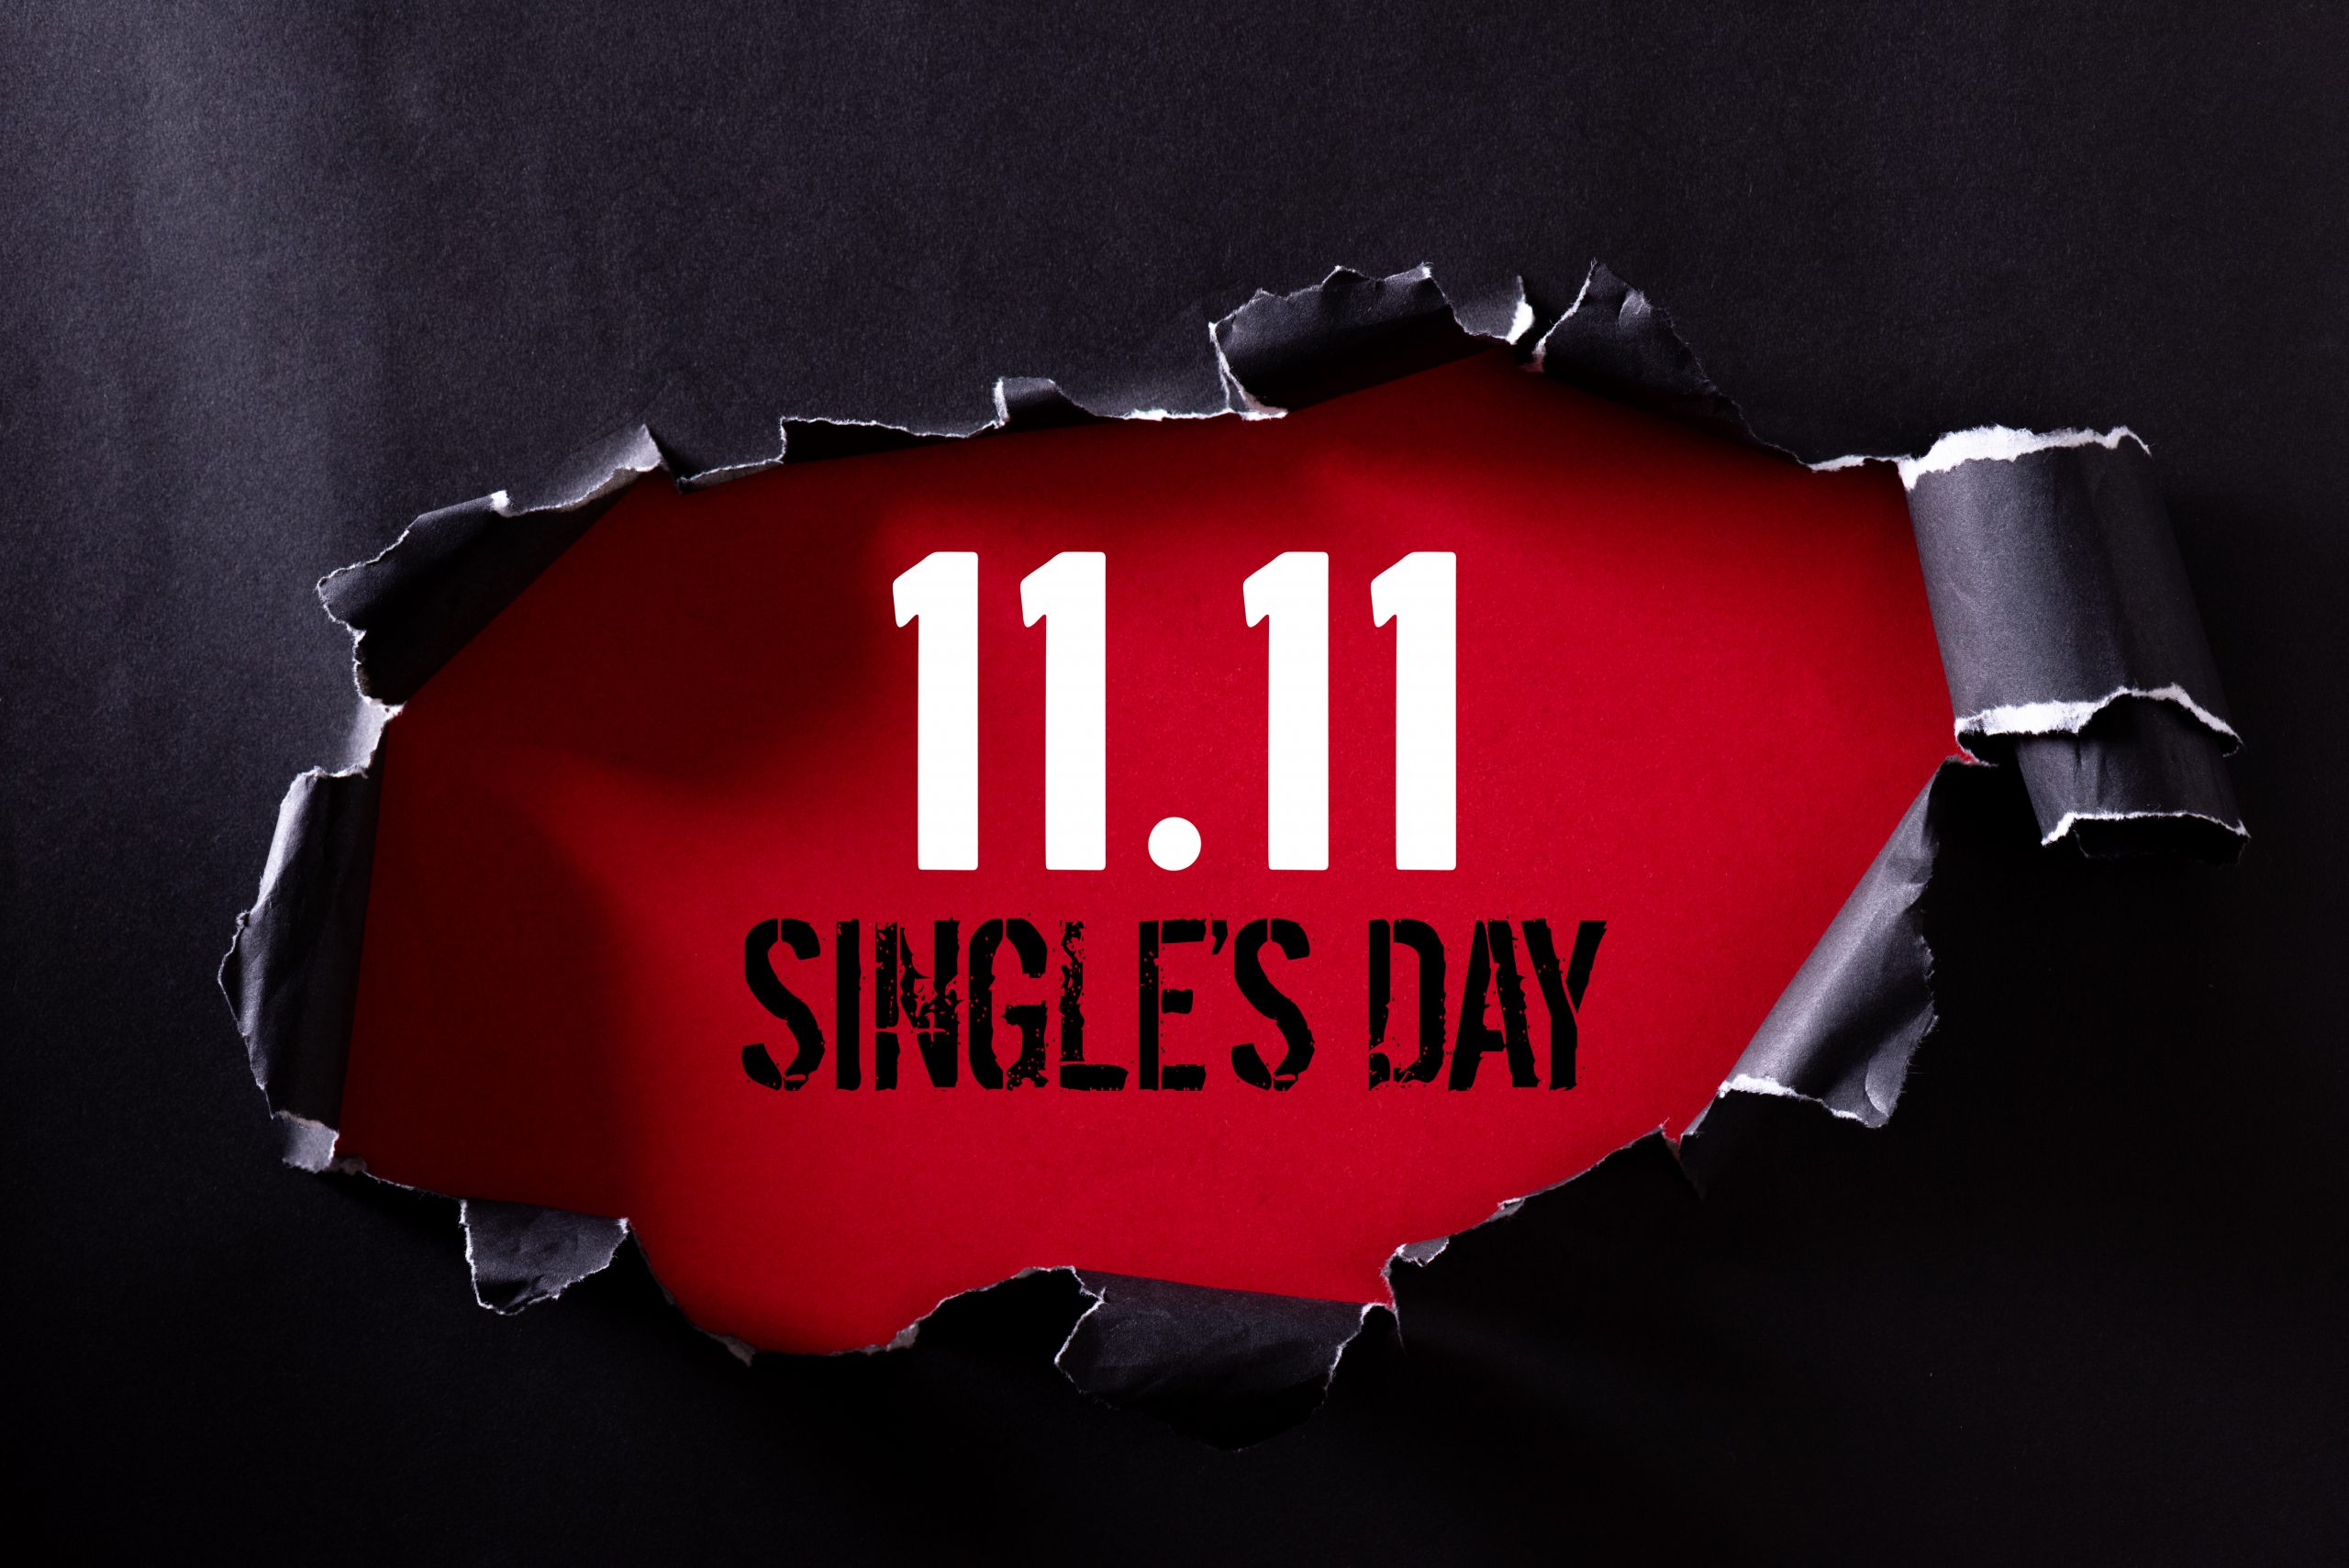 (c) Singledayfrance.com